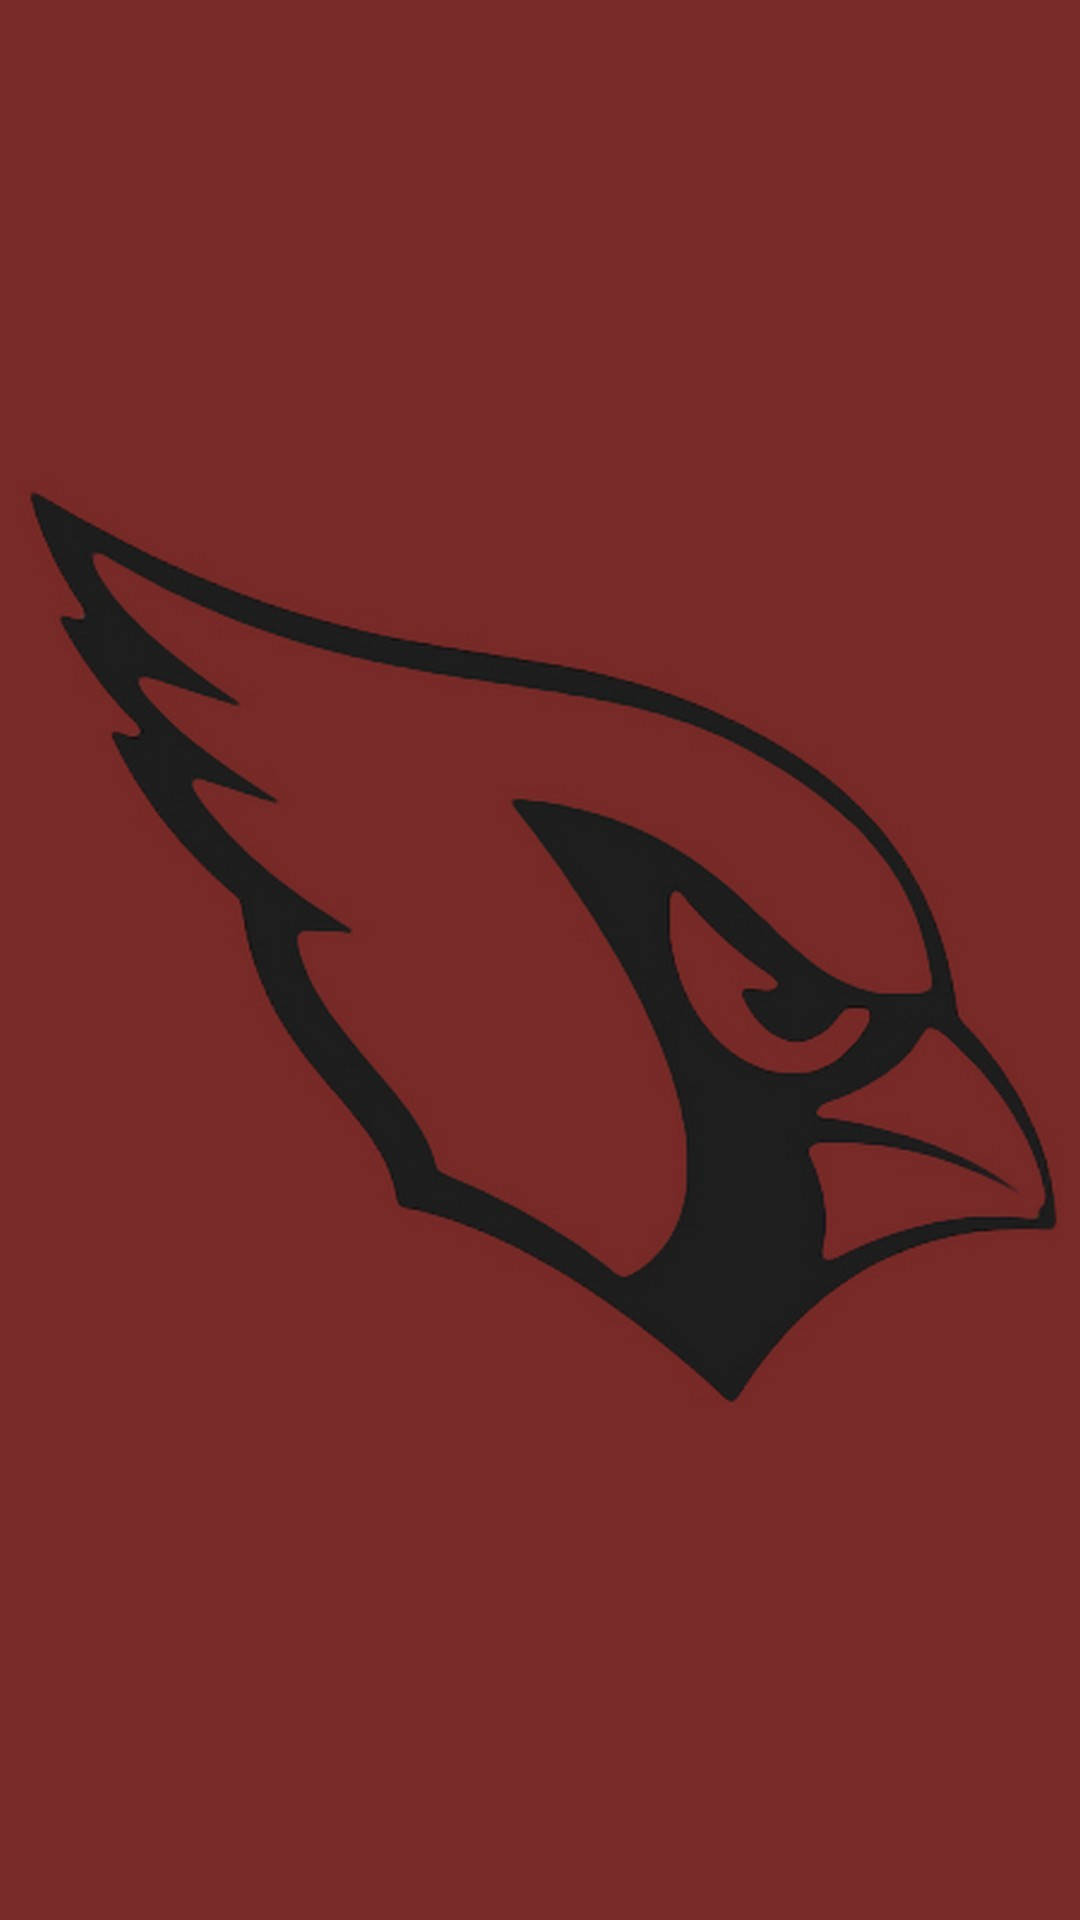 Black And Red Arizona Cardinals Logo Wallpaper